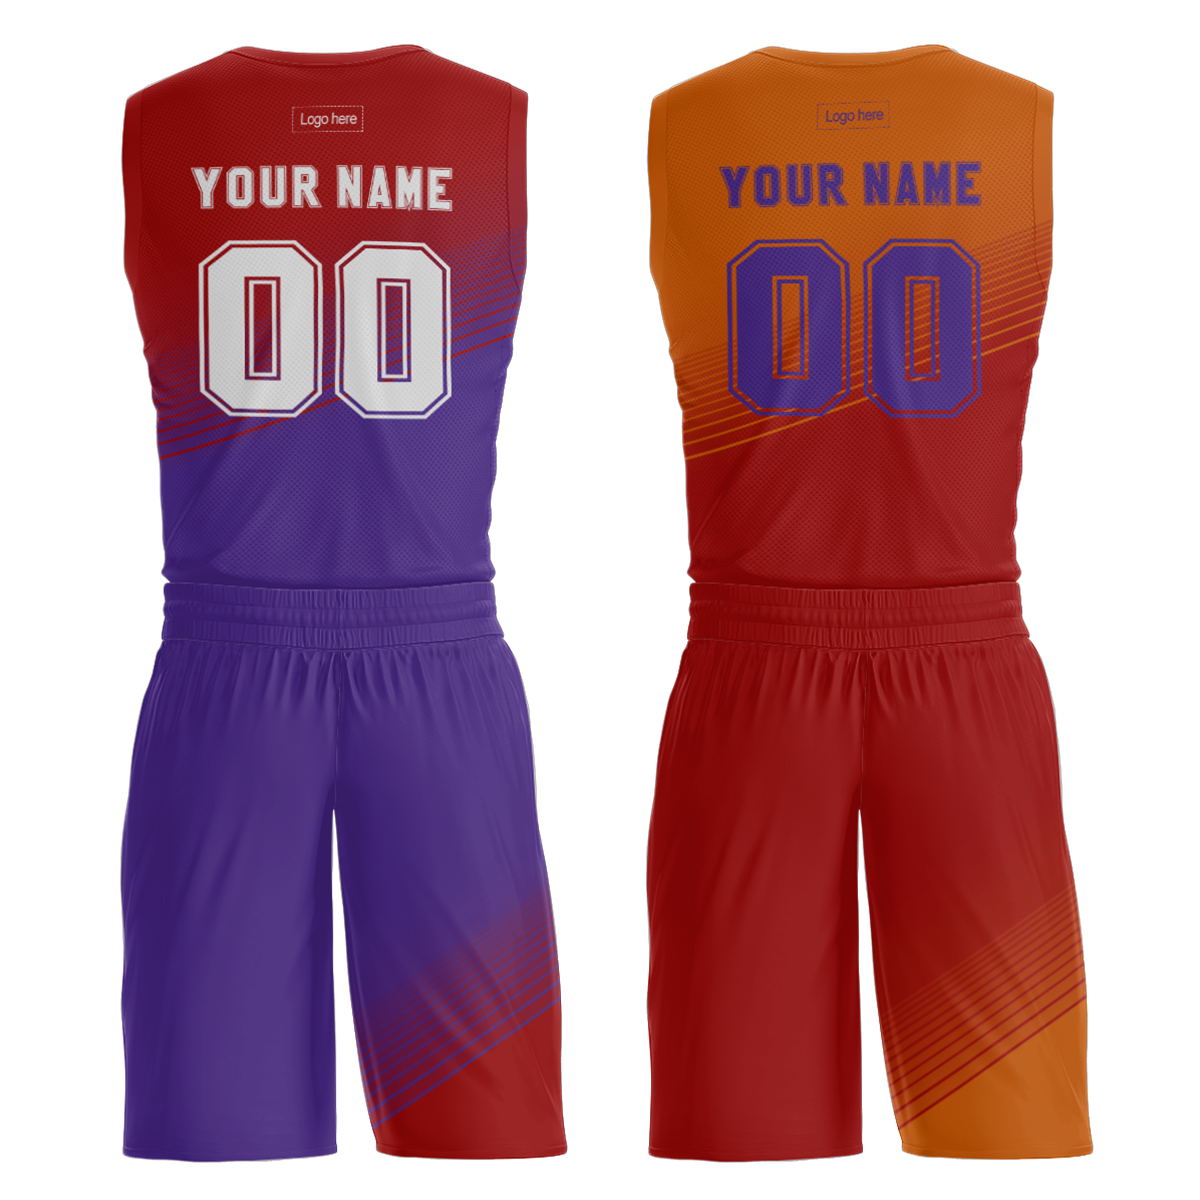 Custom Sports Uniform Jerseys Printed Sublimation Reversible Athletic Team Basketball Vest Jersey Wear for Men/Women